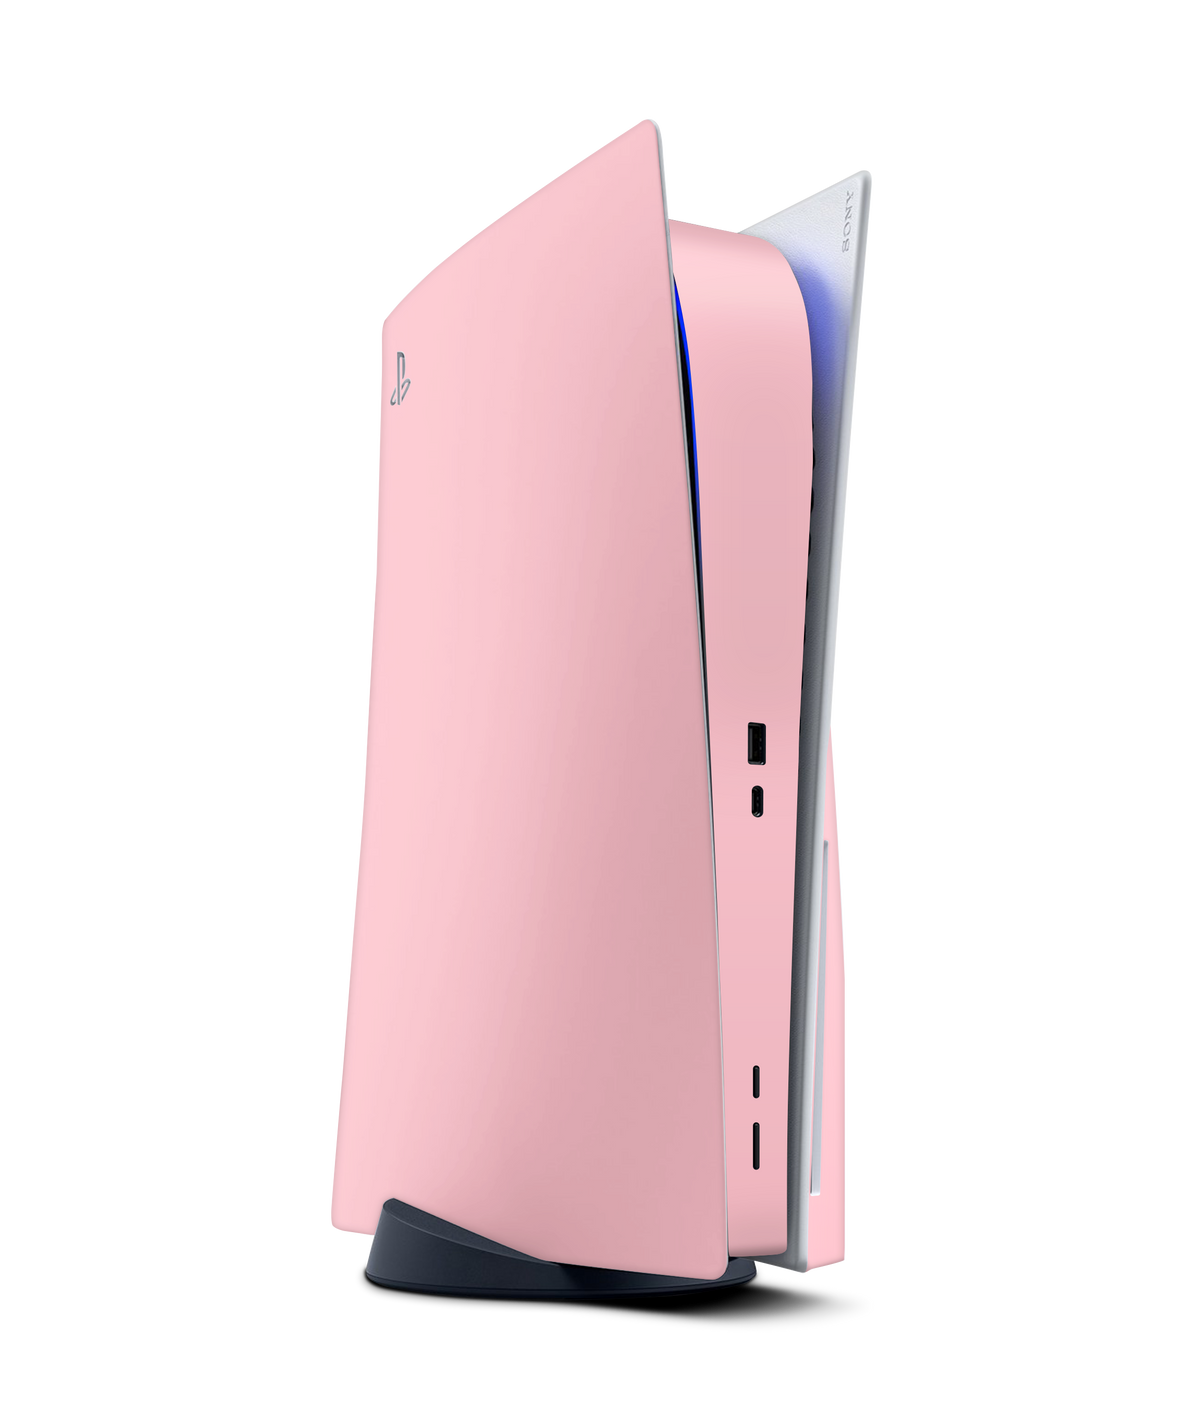 PlayStation 5 Disc Blush Pink